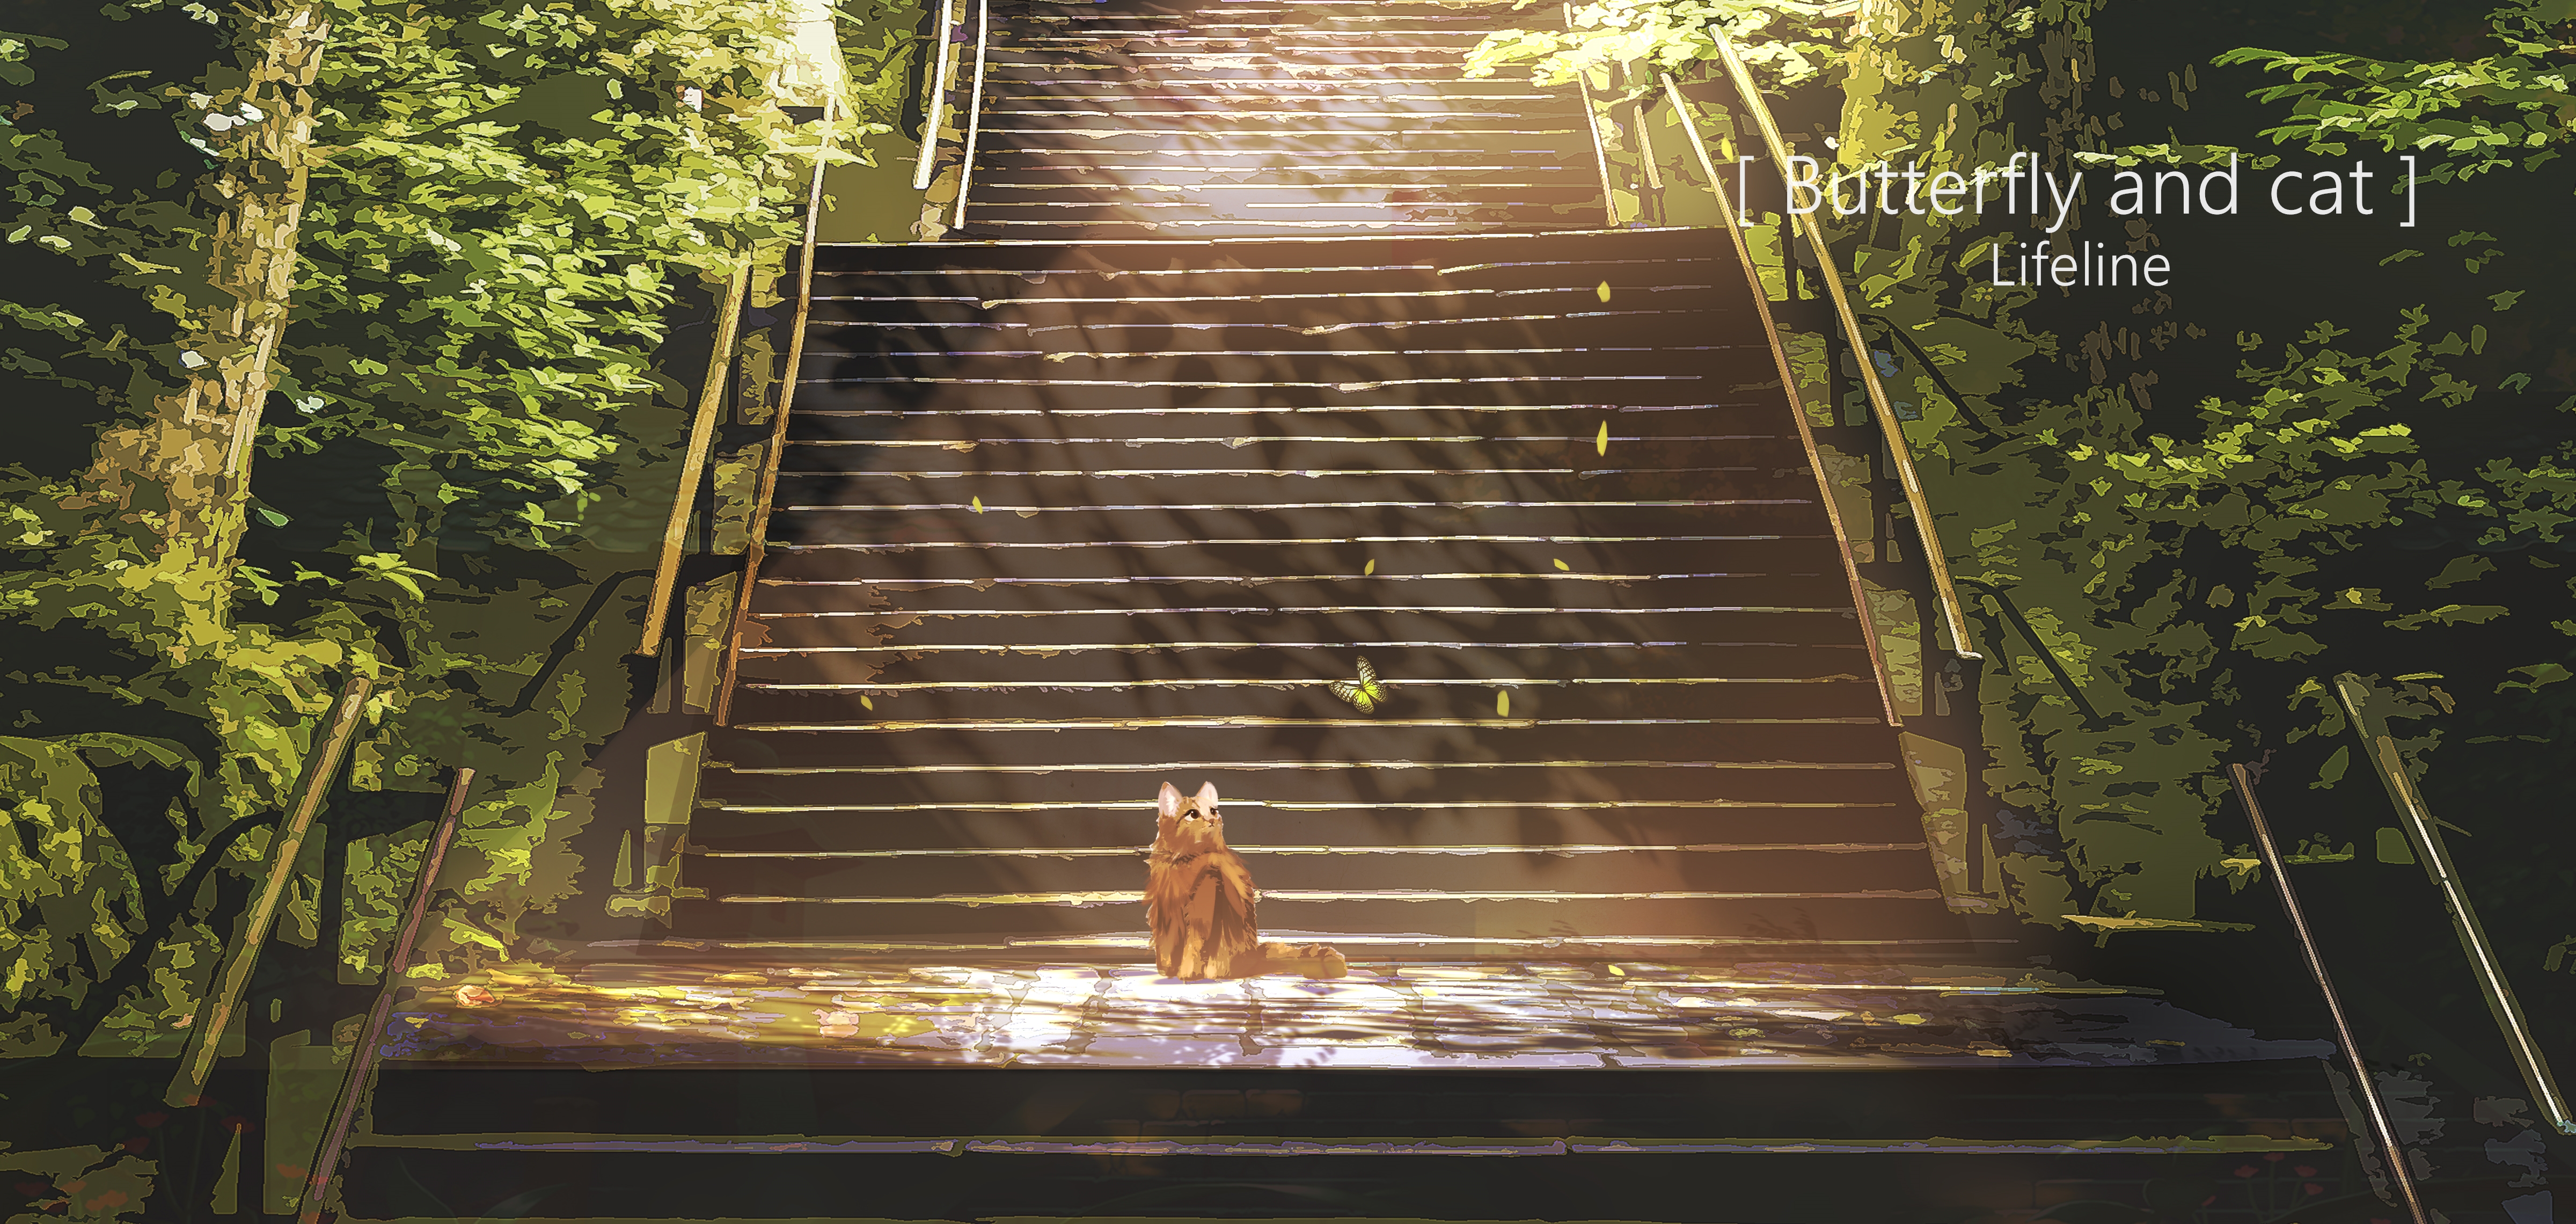 Anime Digital Art Artwork 2D Portrait Lifeline Cats Butterfly Stairs 4800x2280